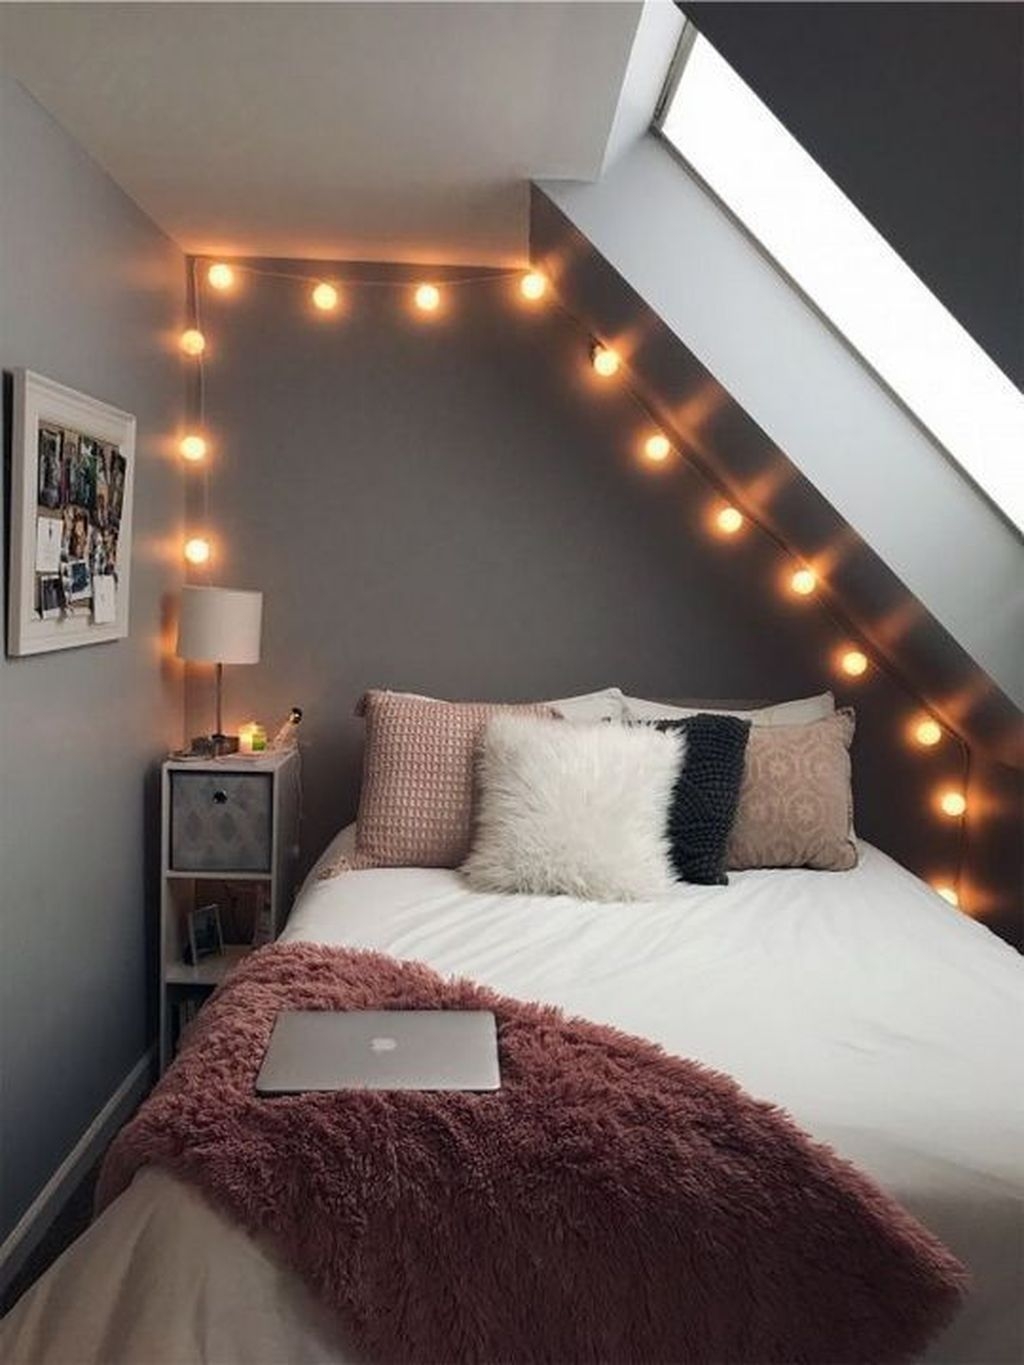 Trendy Decoration Ideas For Teenage Bedroom Design 10